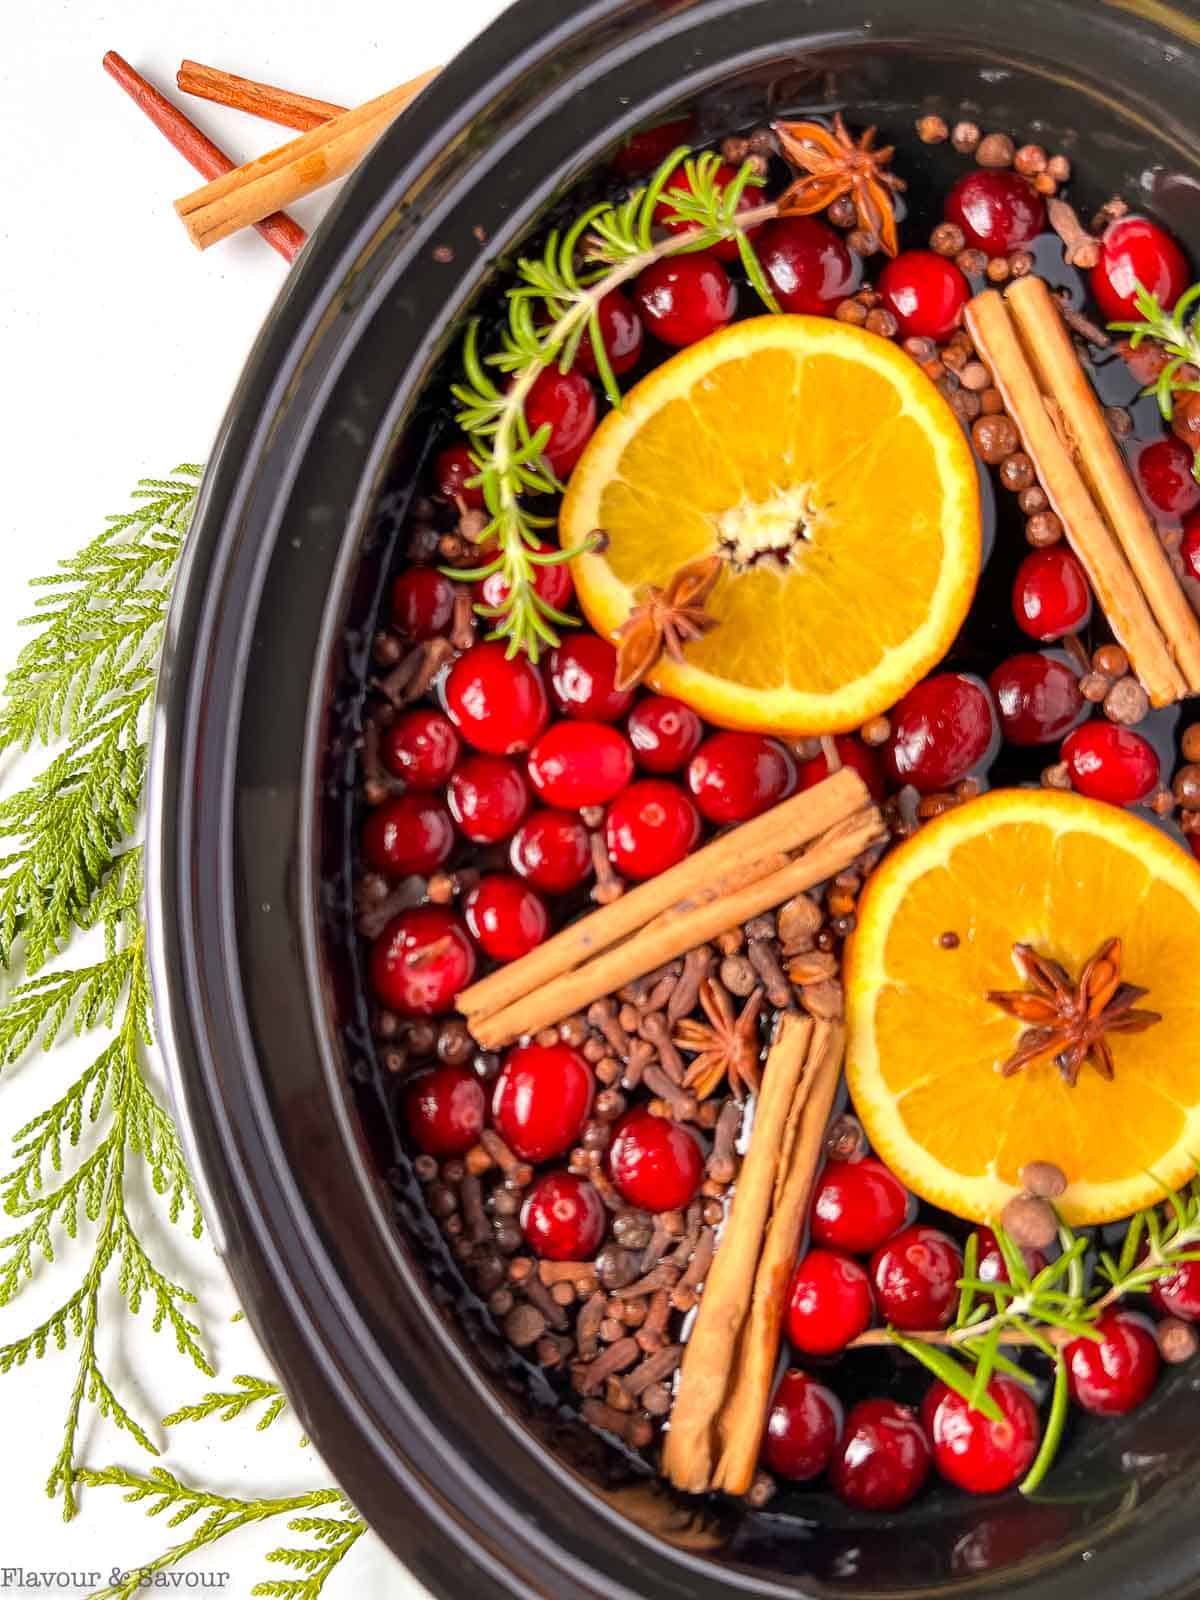 Christmas Stovetop Potpourri – Holiday Simmering Potpourri Recipe